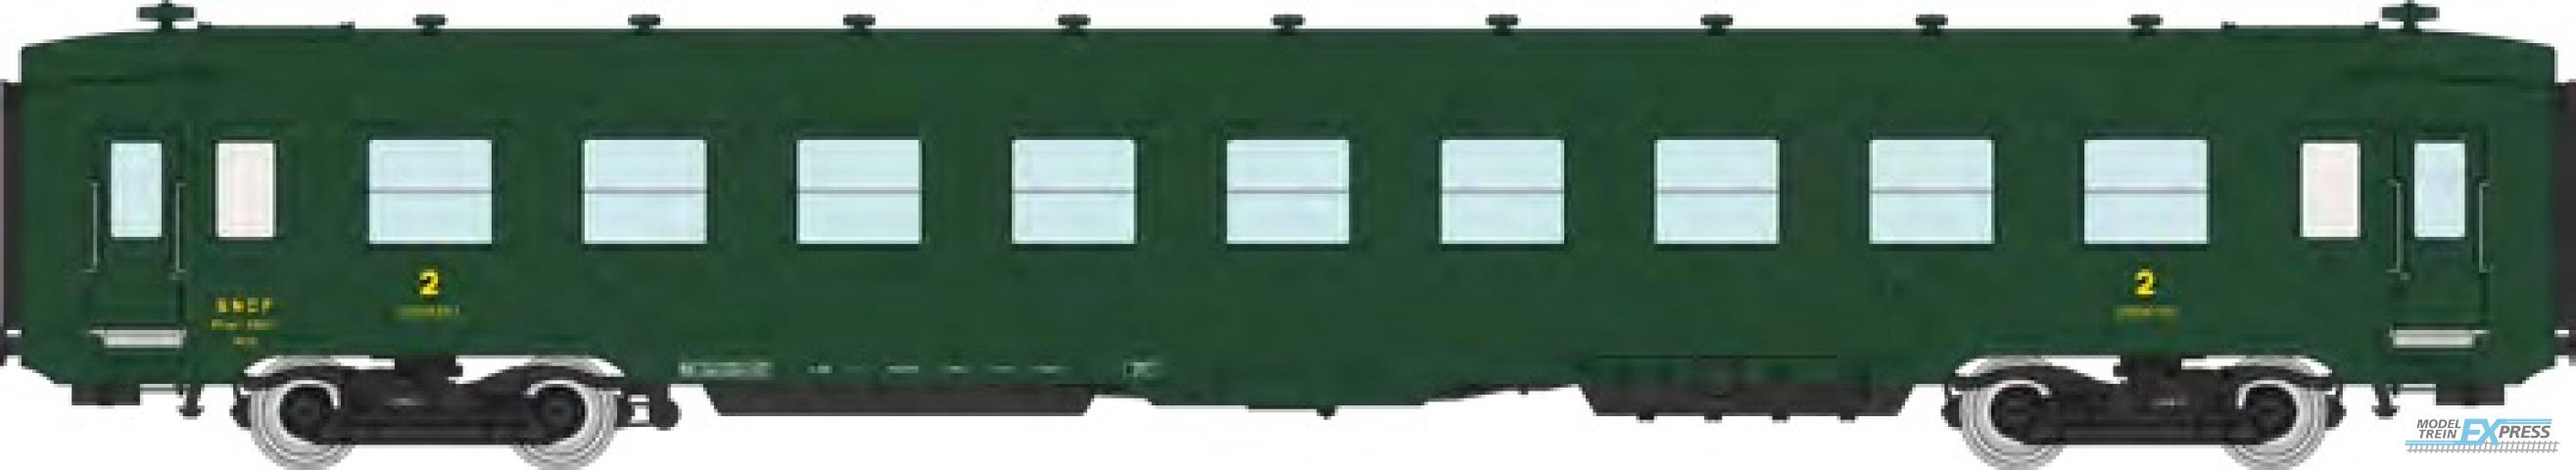 REE models VB-401 U52 DEV AO Sleeping Cars Green 306 2nd class B9c9 myfi 32017 Era III B